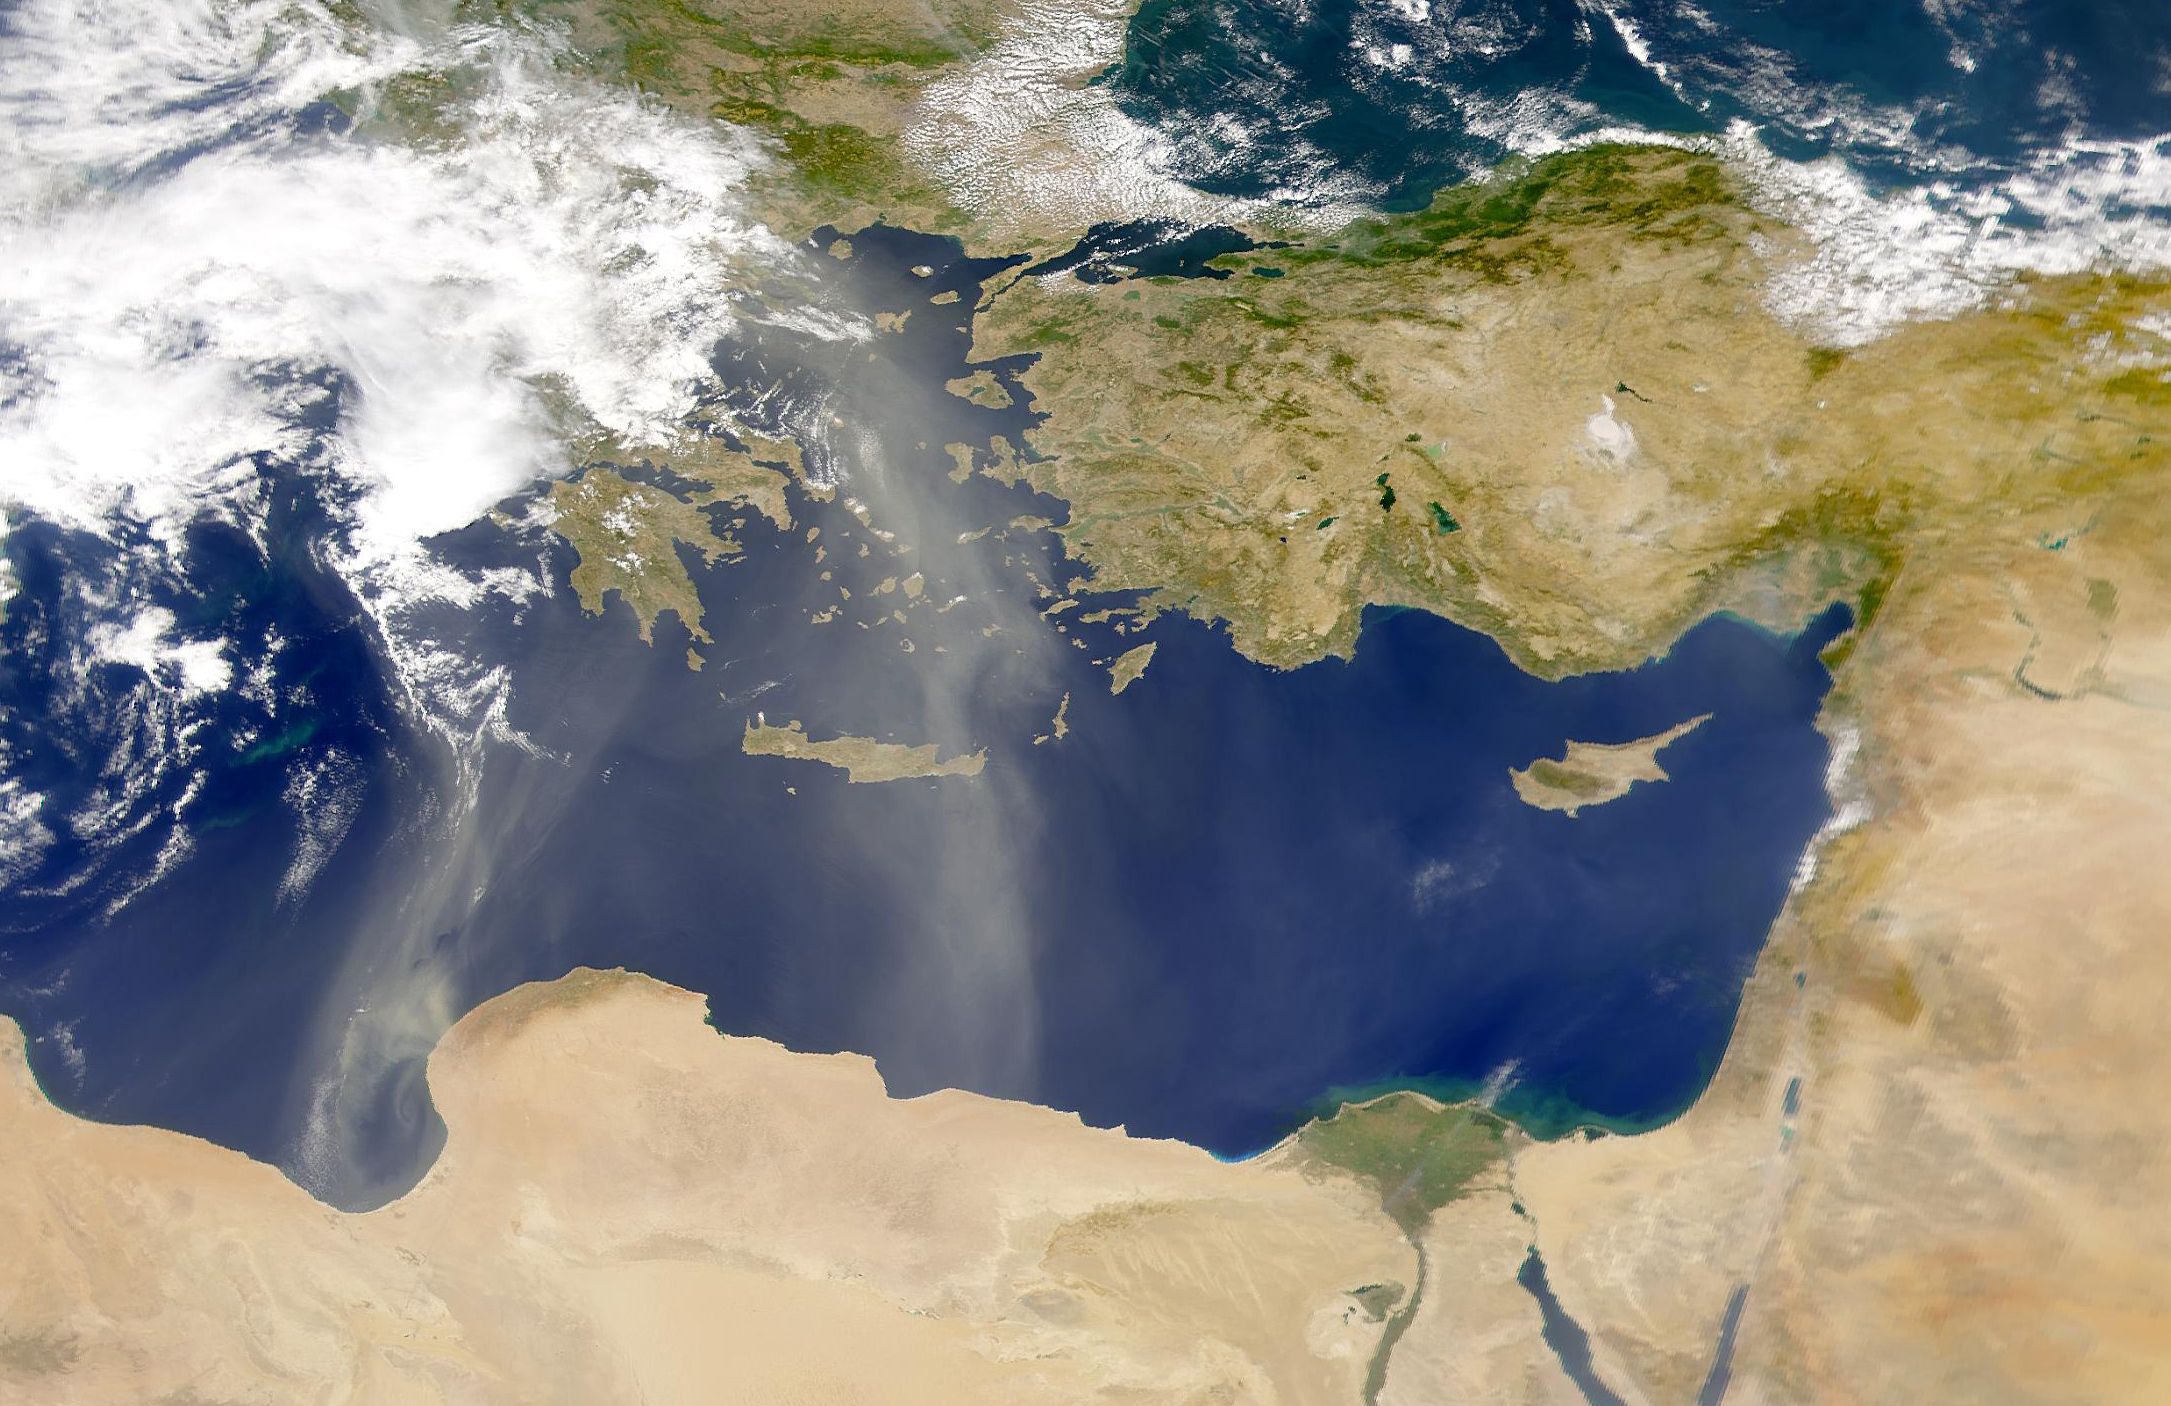 eastern mediterranean sea map